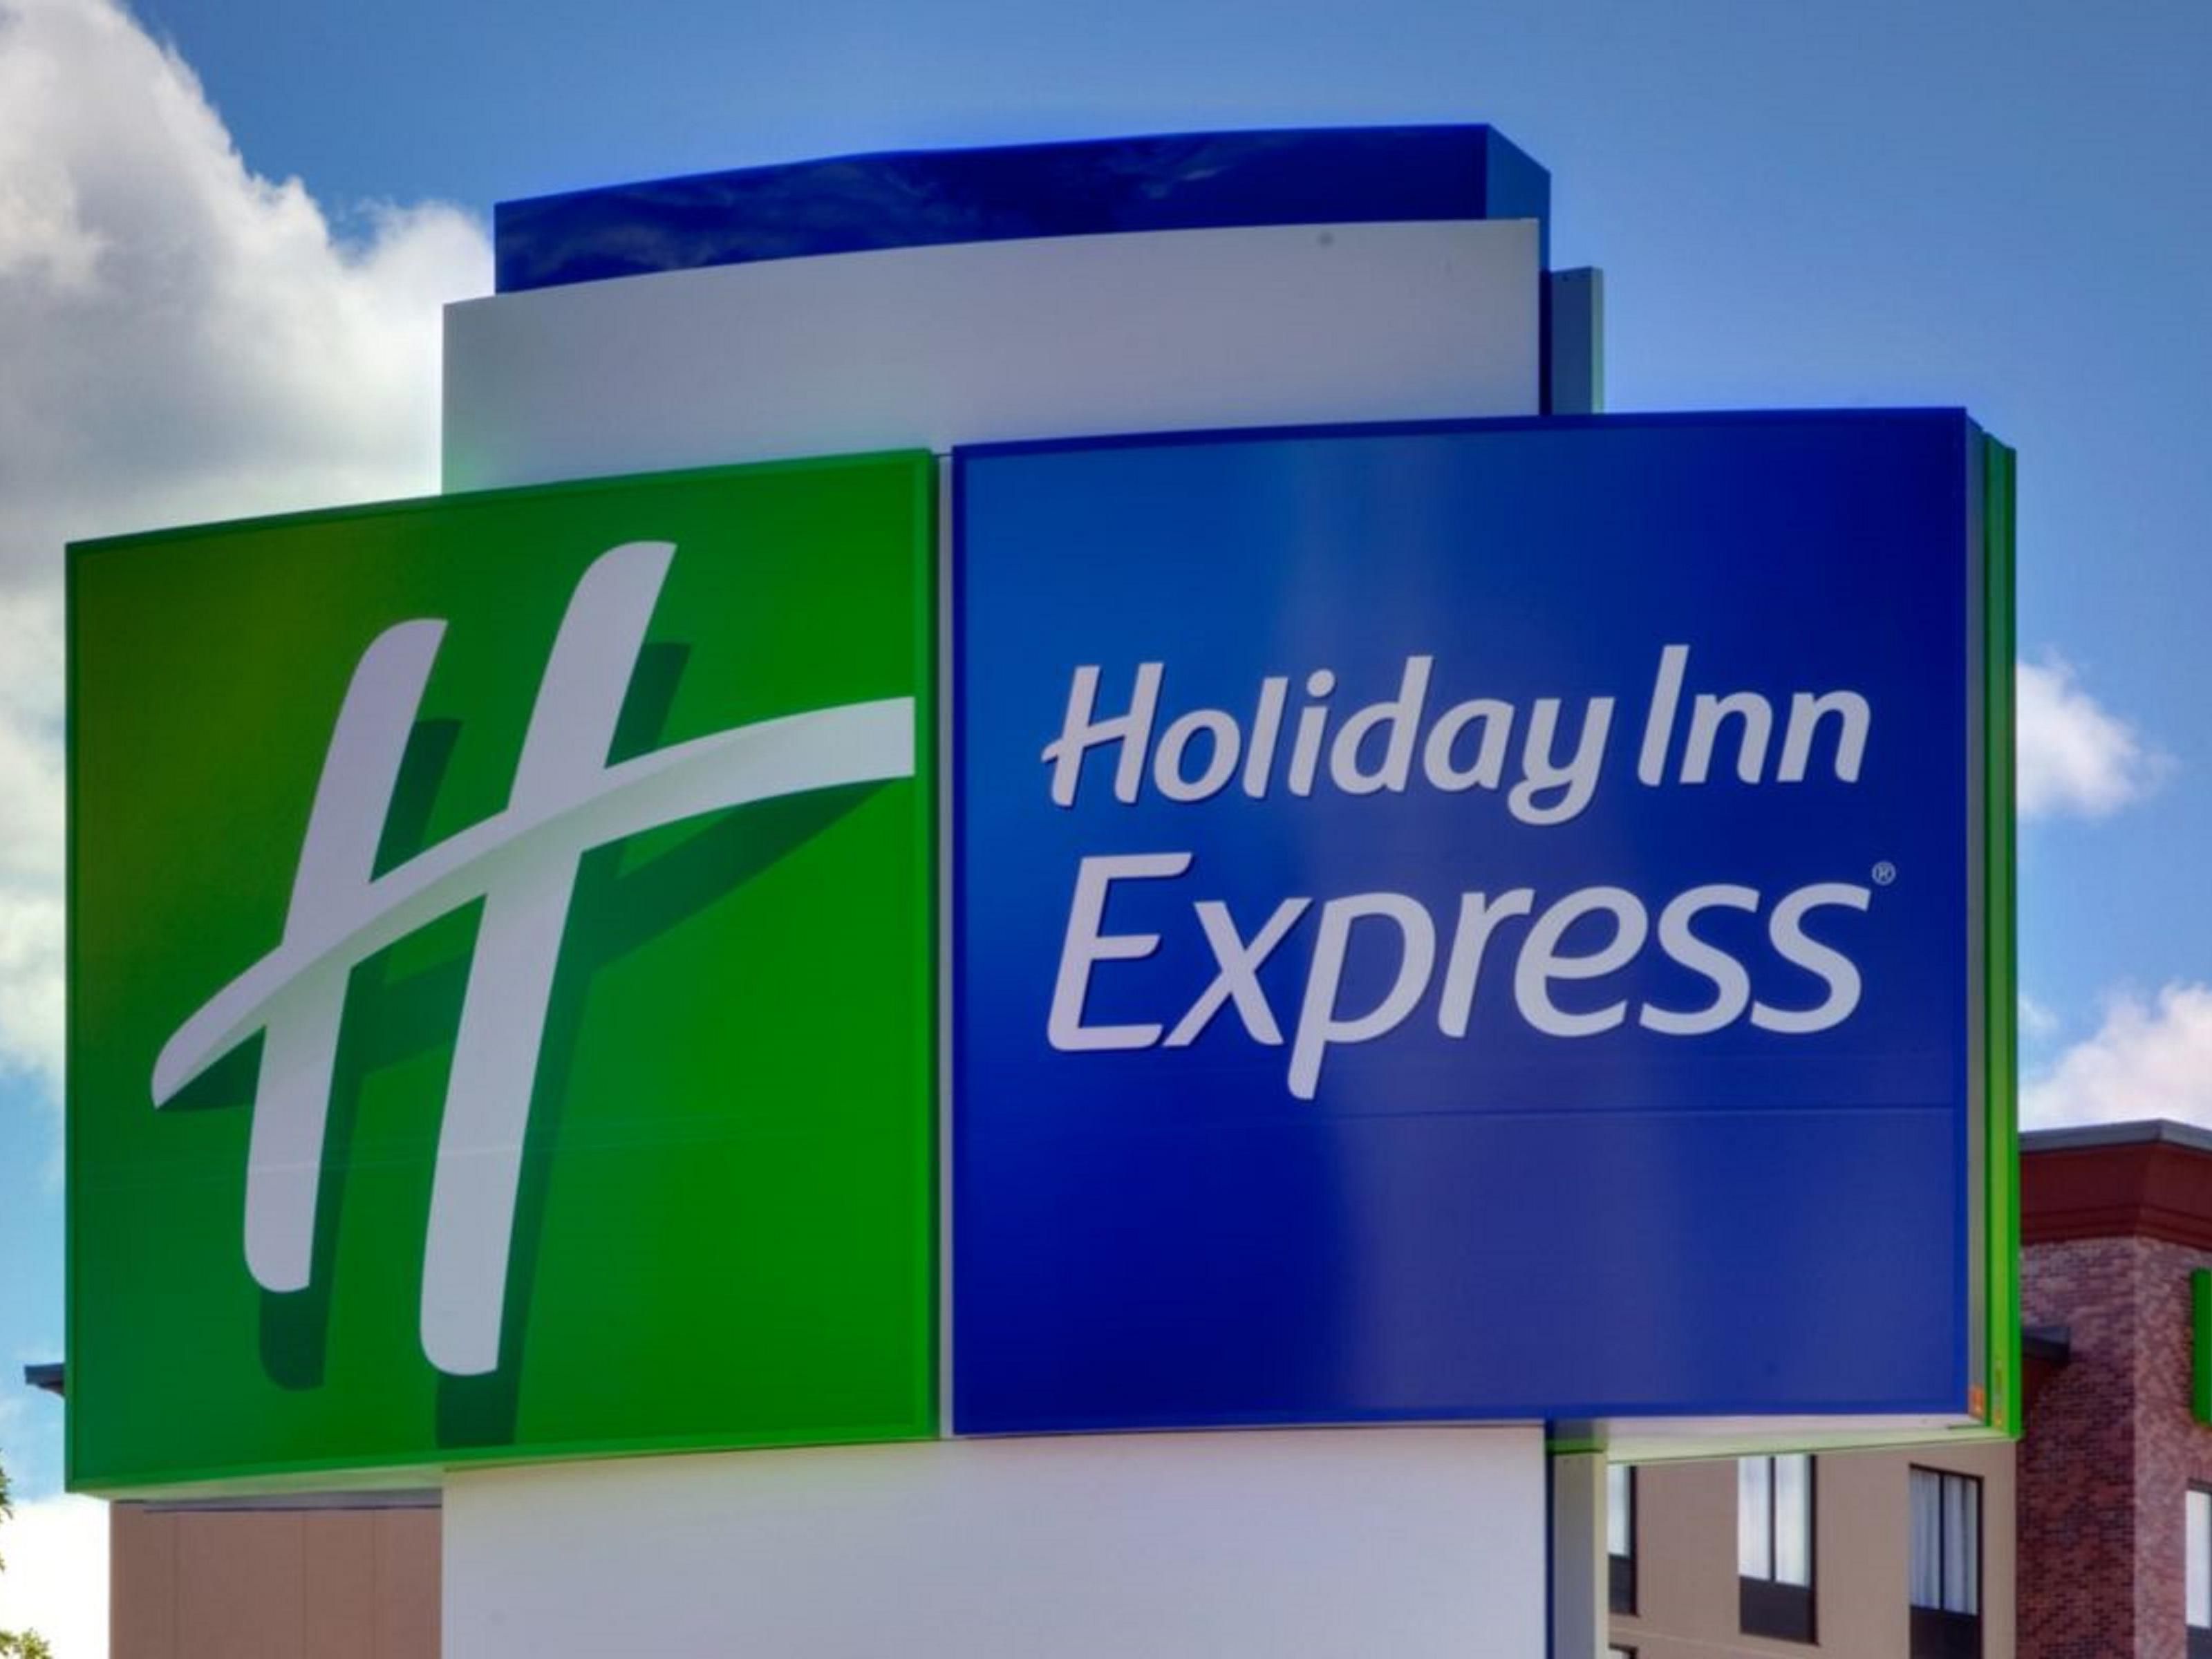 Holiday Inn Express Miami 9418460521 4x3